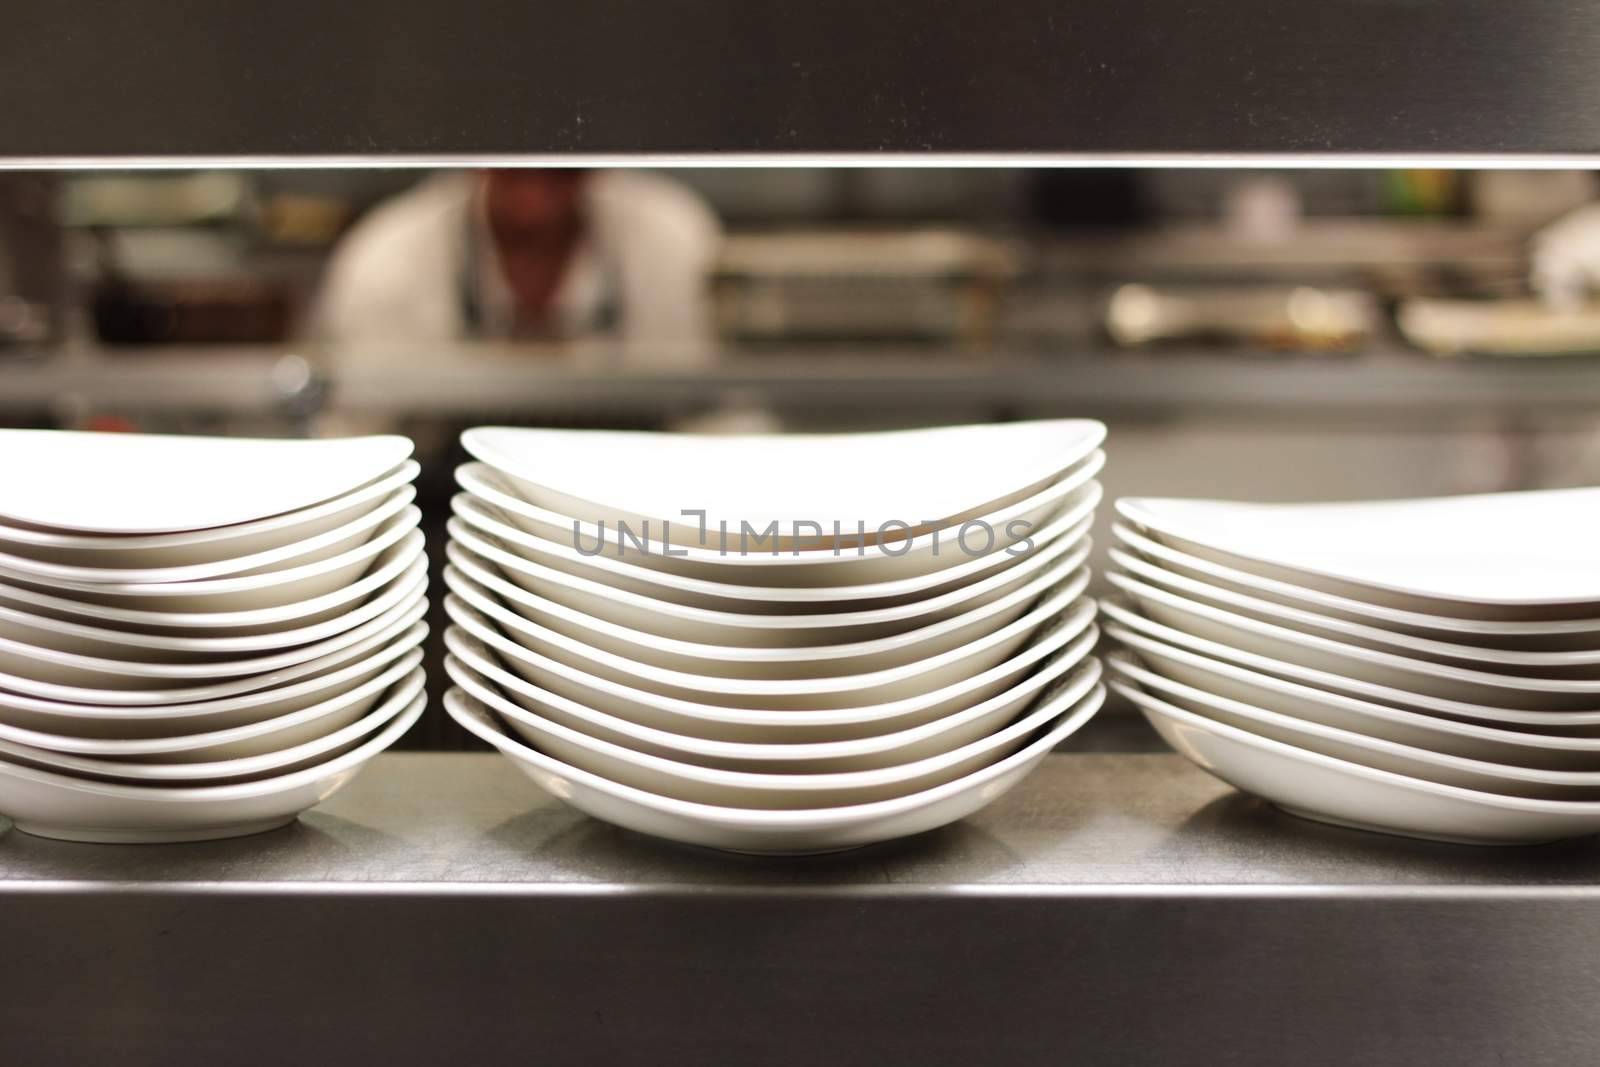 plates and crockery by neil_langan